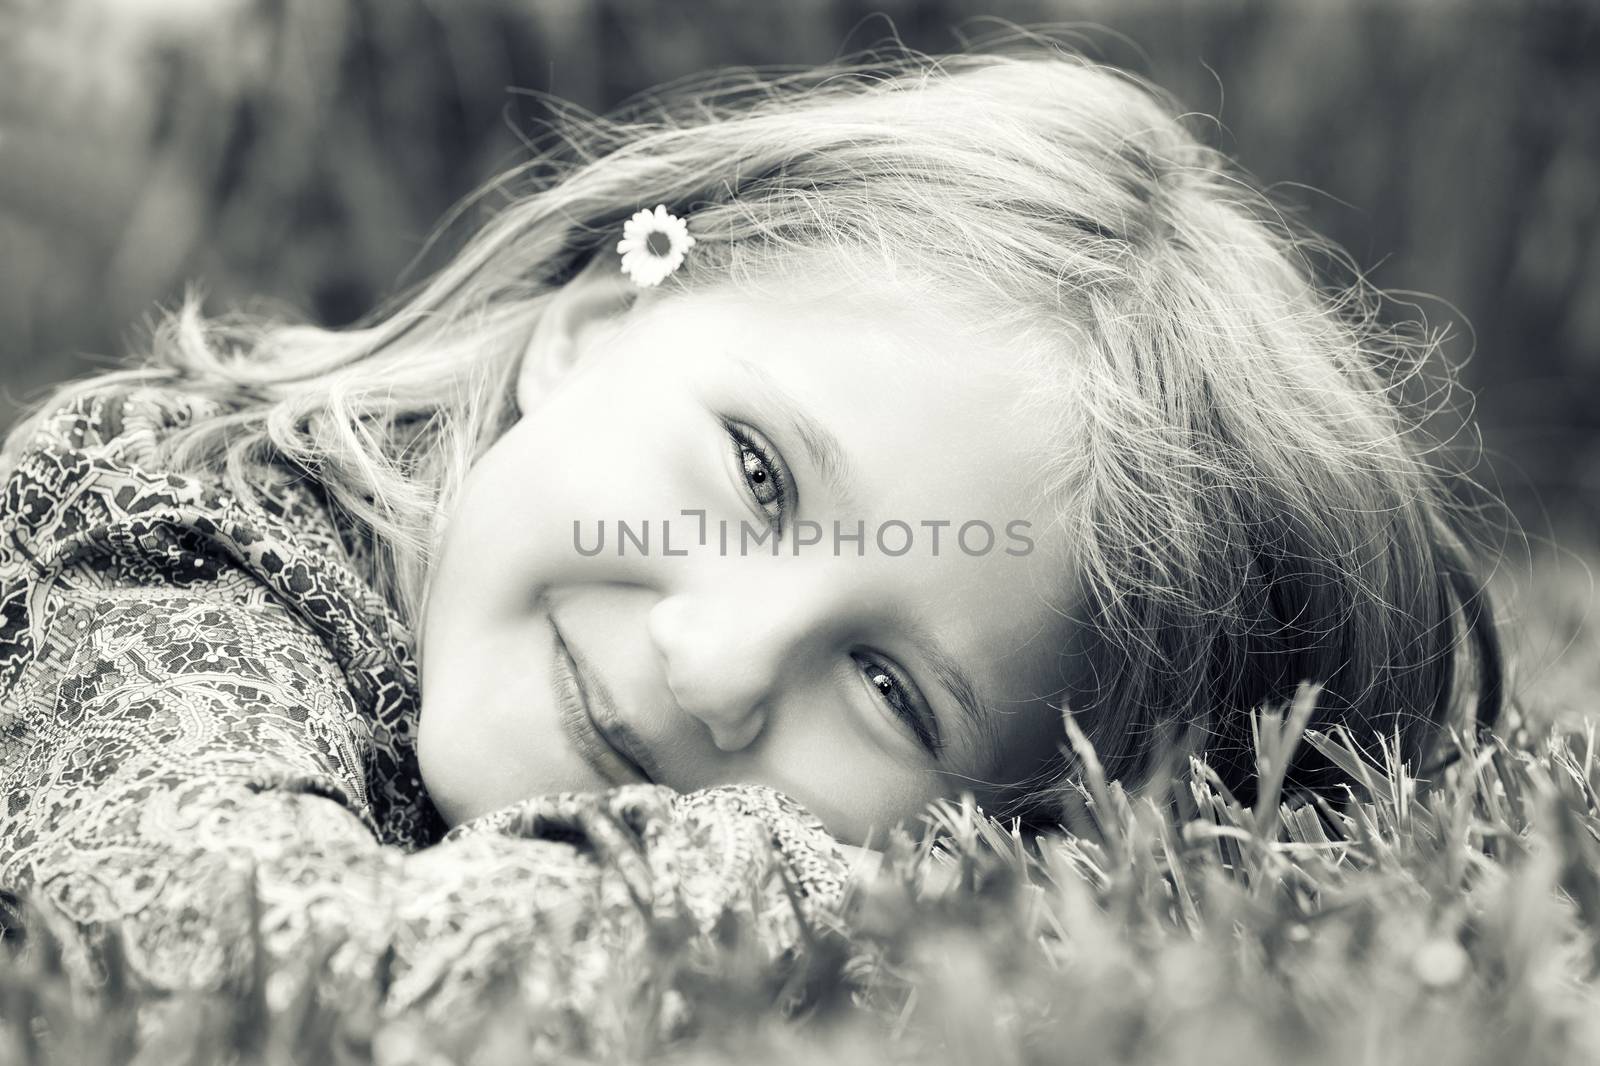 Little adorable girl lying on grass smiling